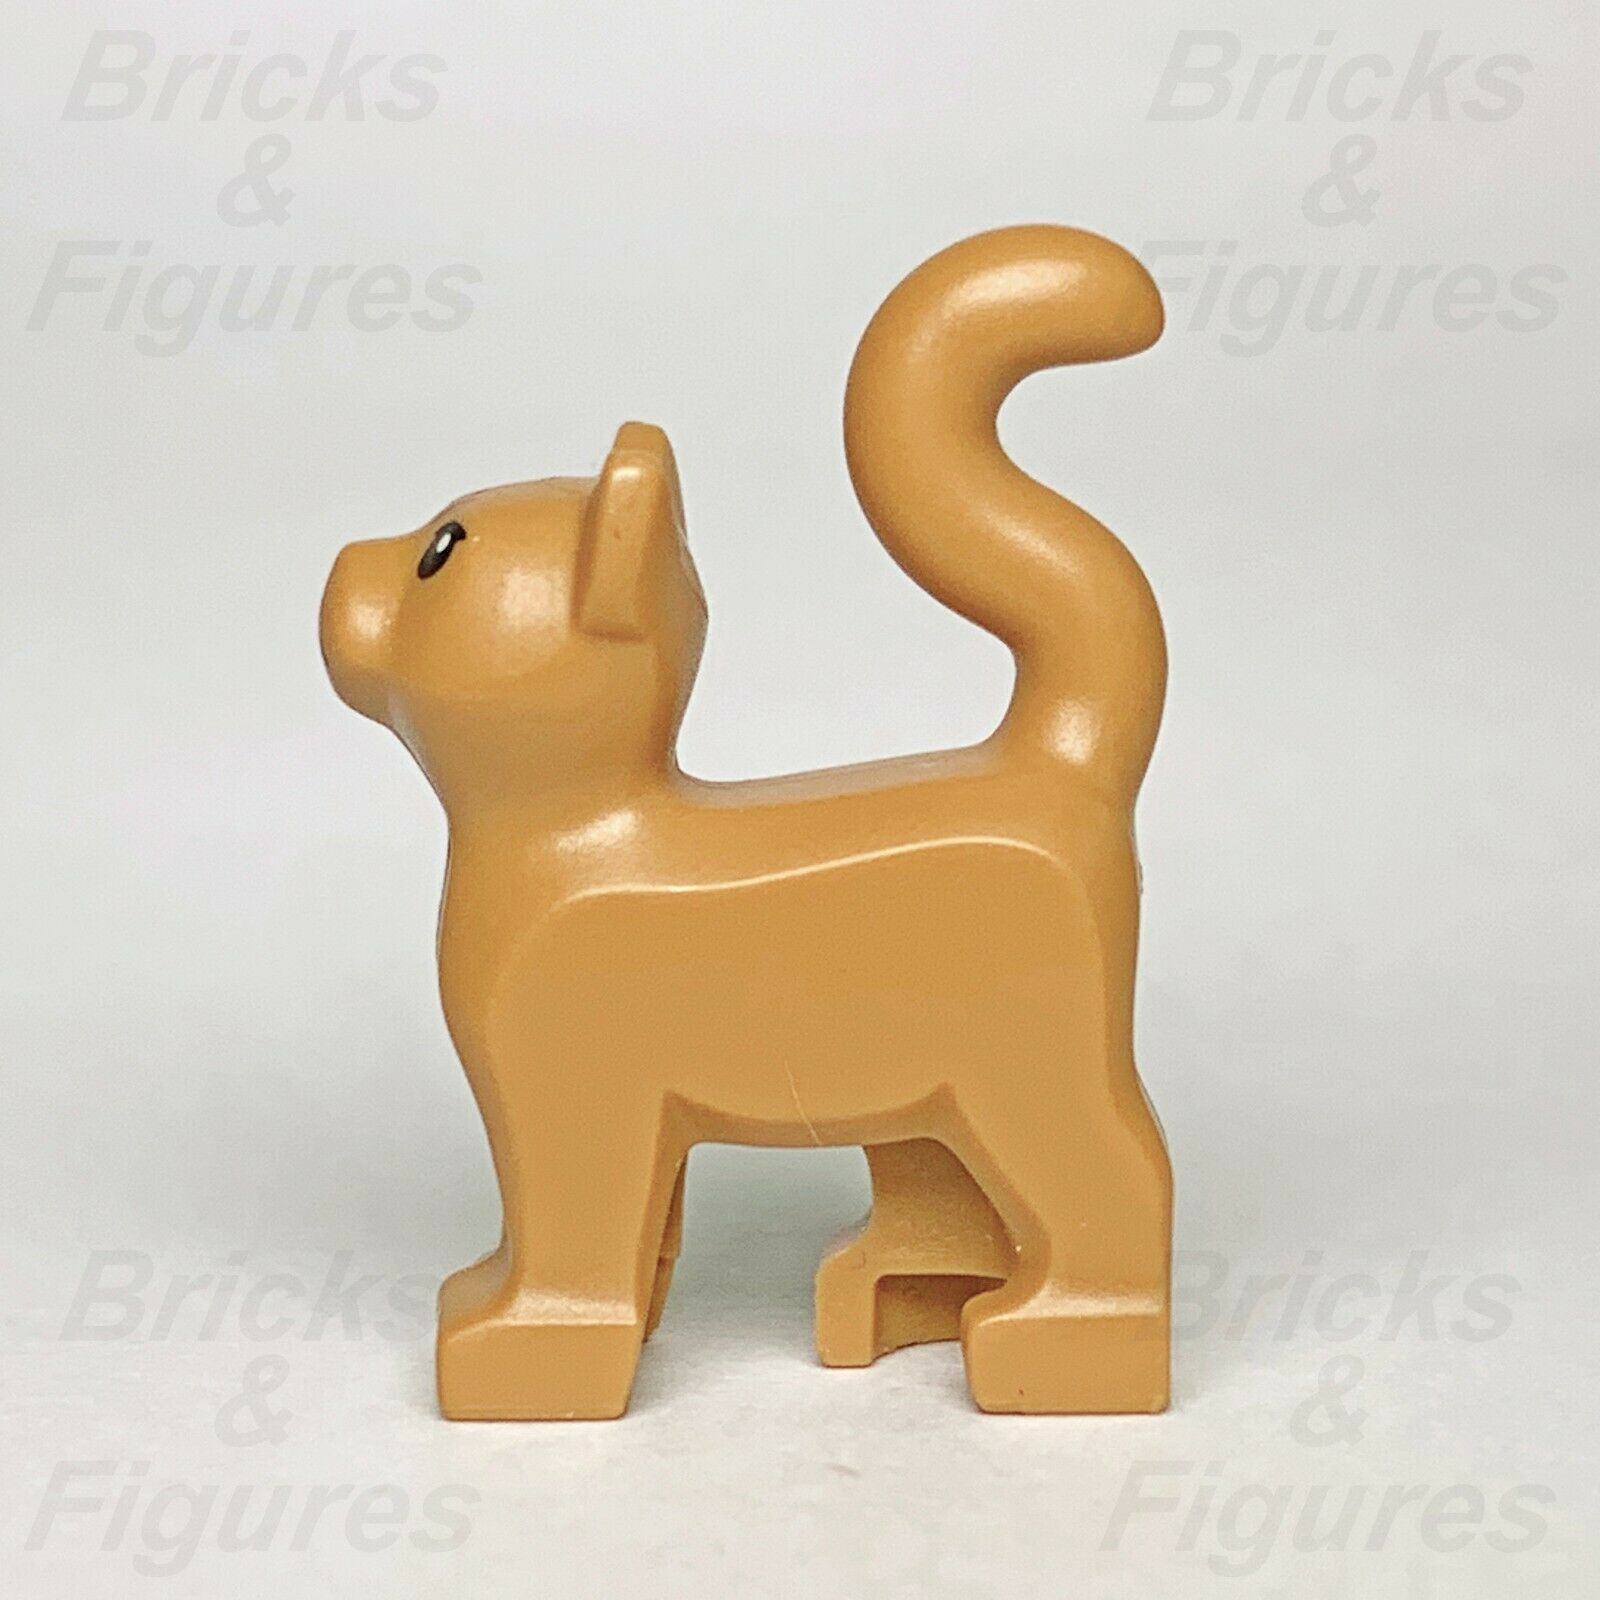 New Harry Potter LEGO Crookshanks Hermion Granger's Pet Cat Animal Part 71022 - Bricks & Figures